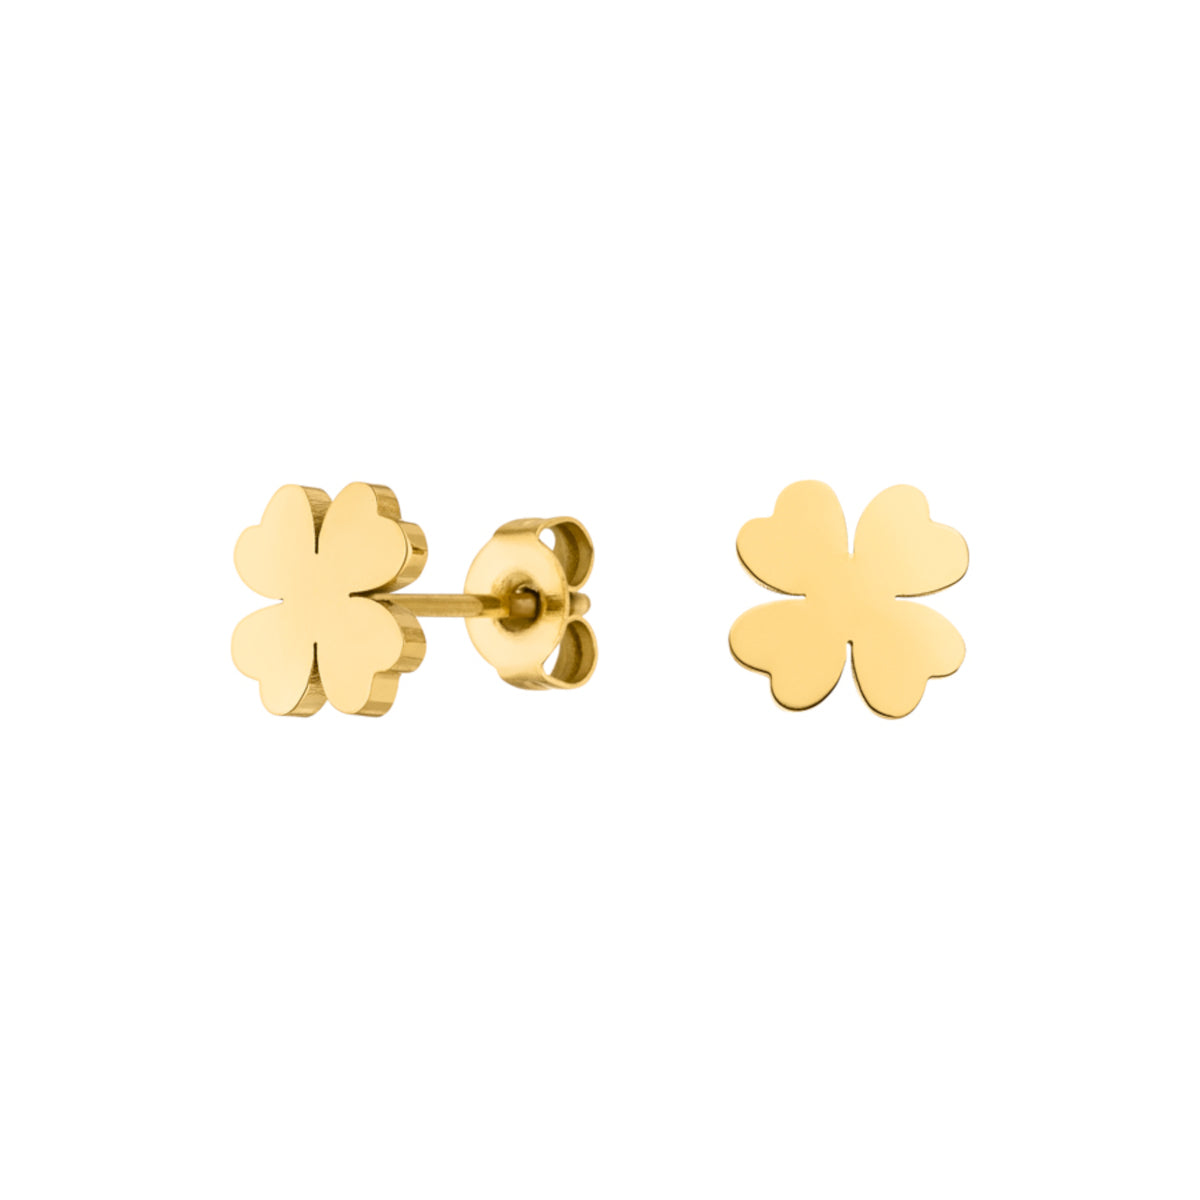 Vergoldete Ohrringe mit Kleeblatt Motiv aus Edelstahl